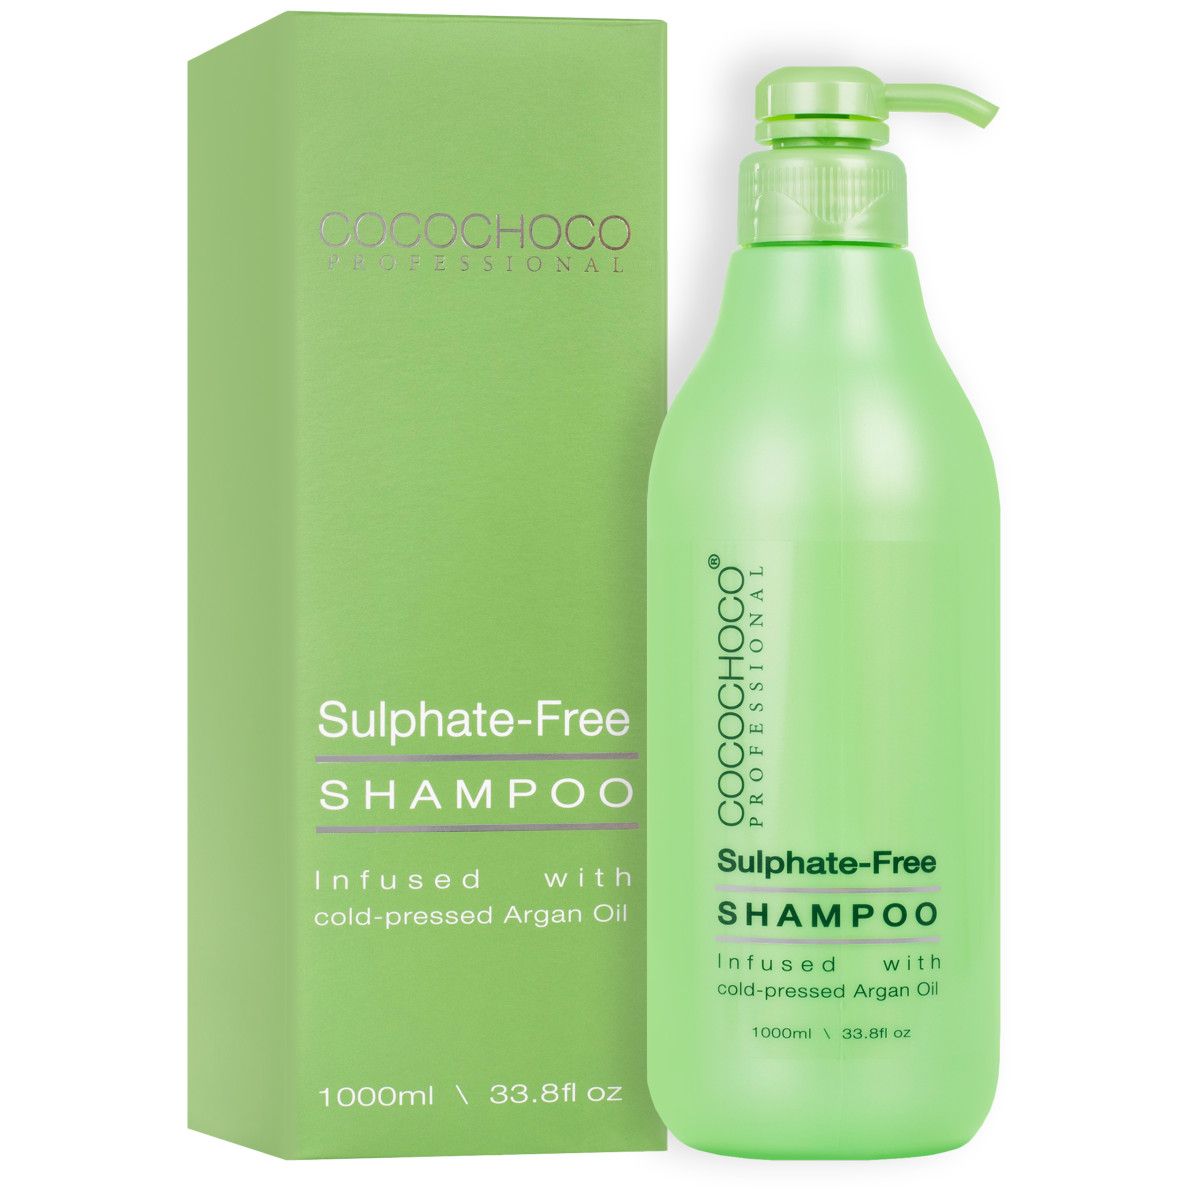 cocochoco szampon sulphate free 150 ml ceneo